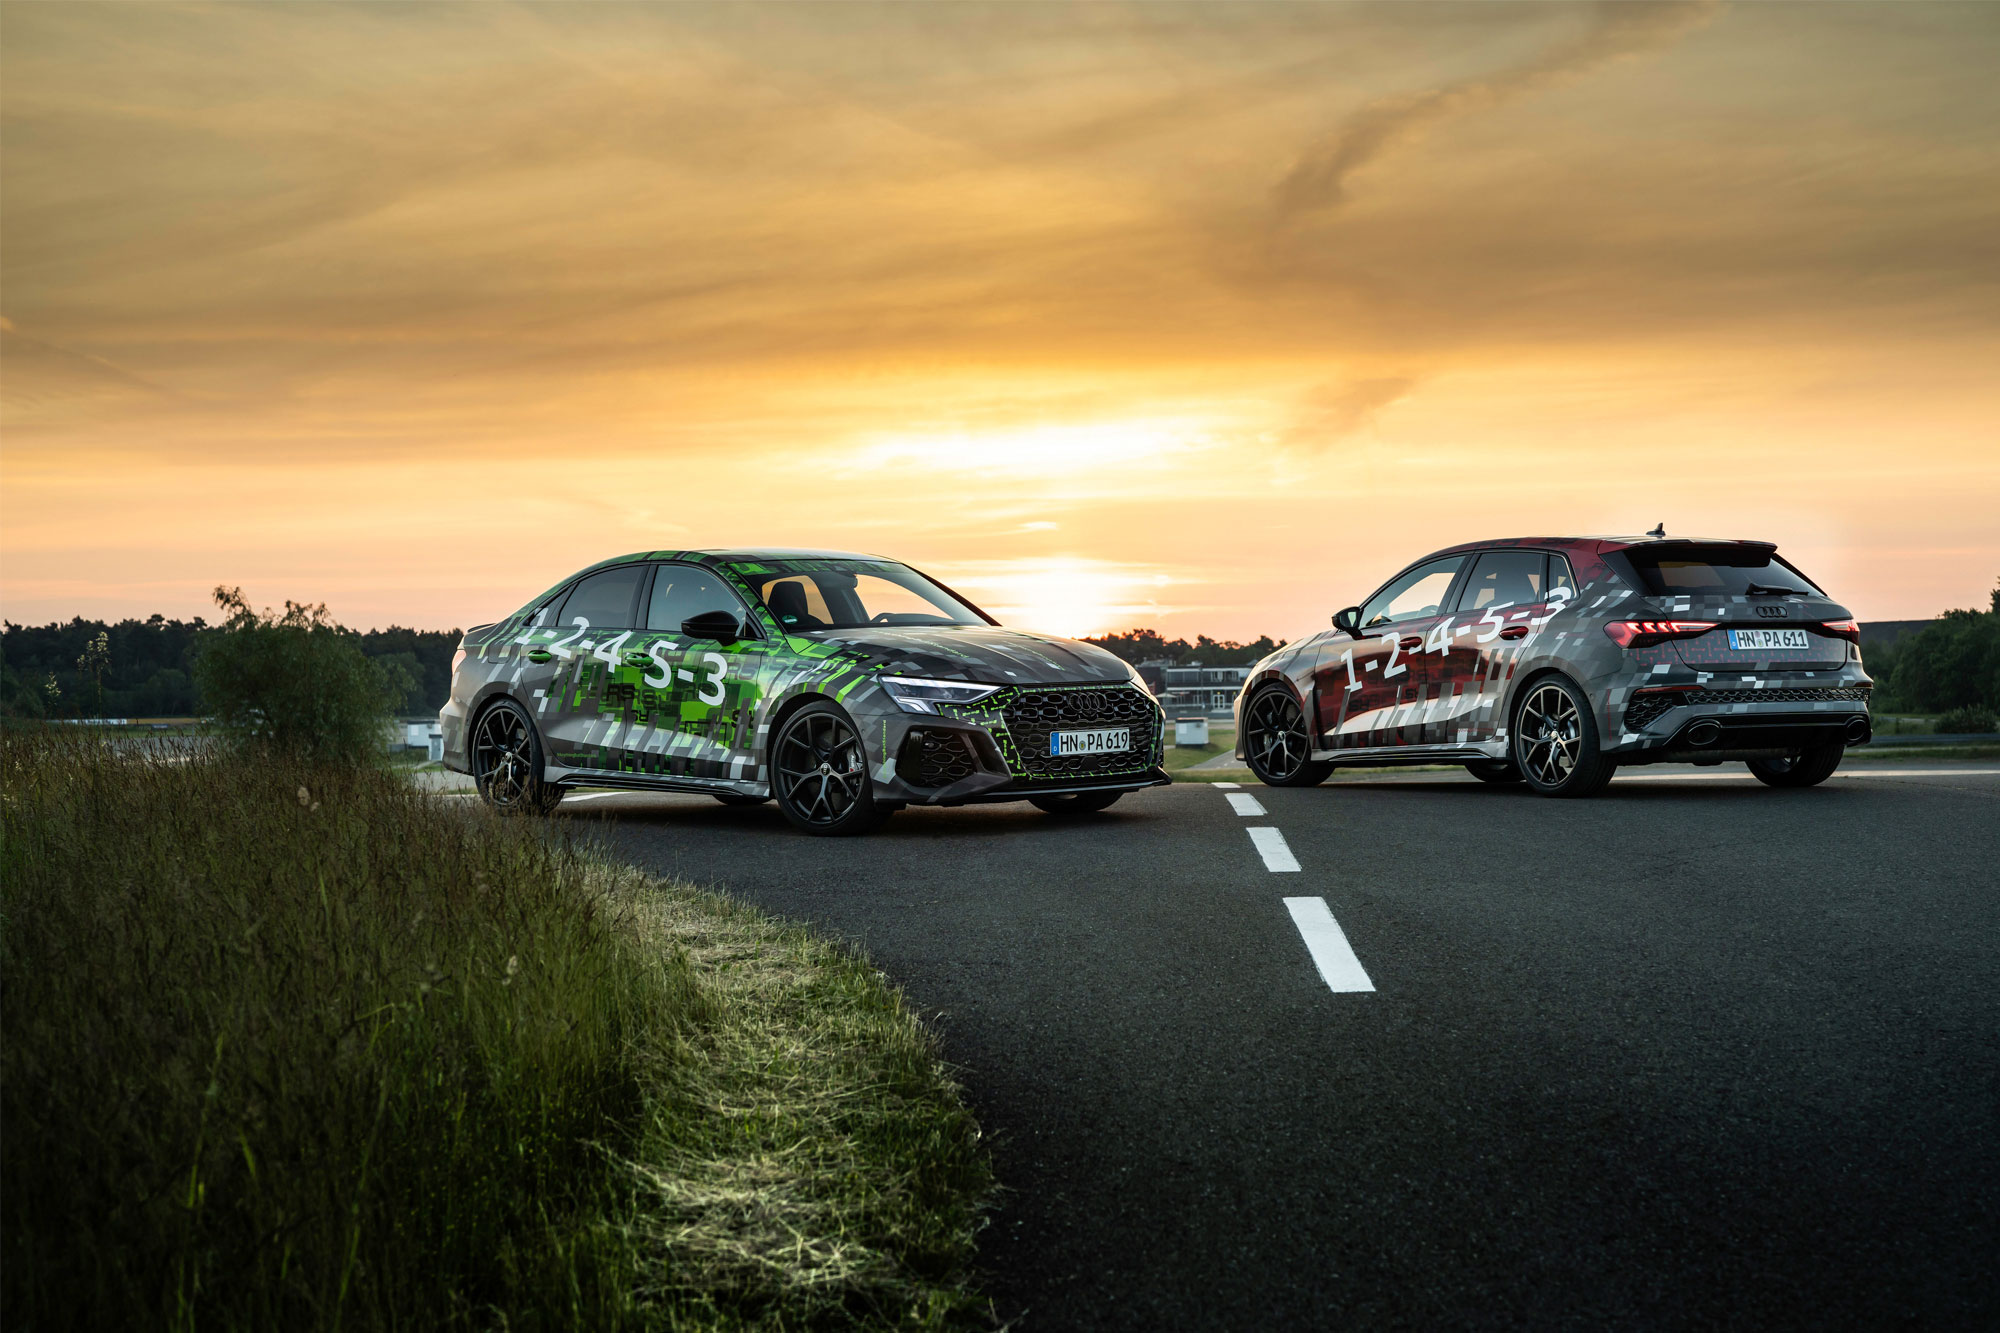 Drift-Mode, 0-100km/h σε 3,8sec και τελική 290km/h. Αυτό είναι το νέο Audi RS3!